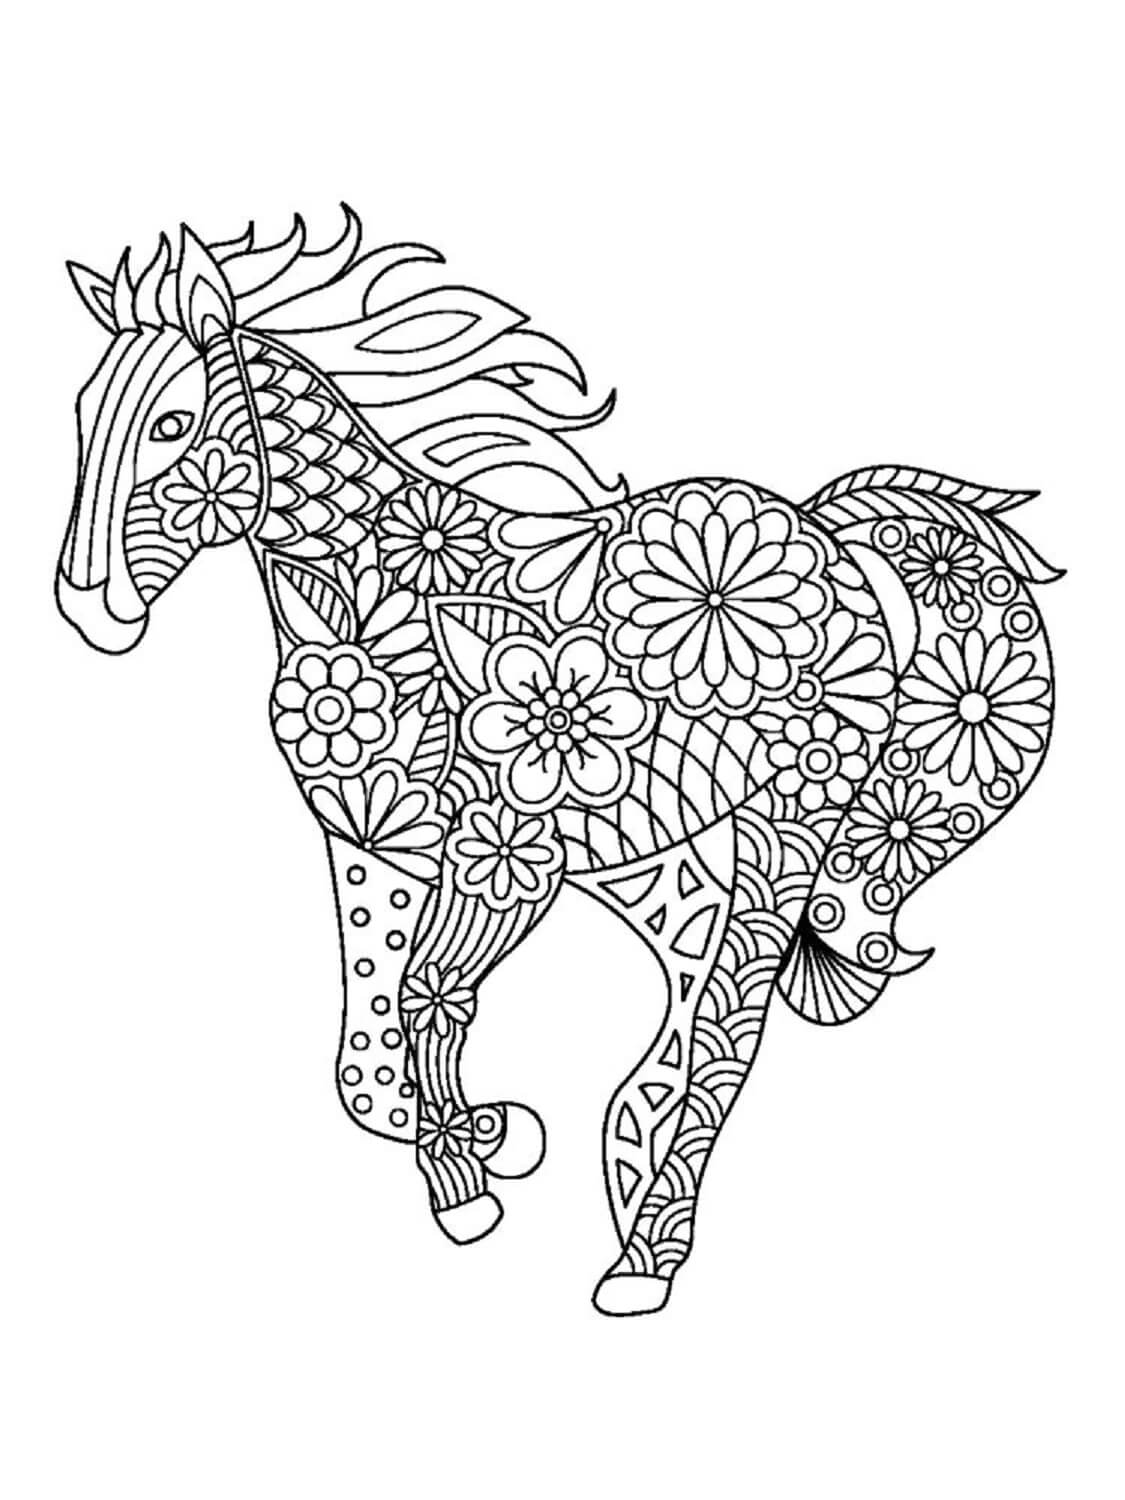 Mandala Horse Coloring Page - Sheet 8 Mandalas